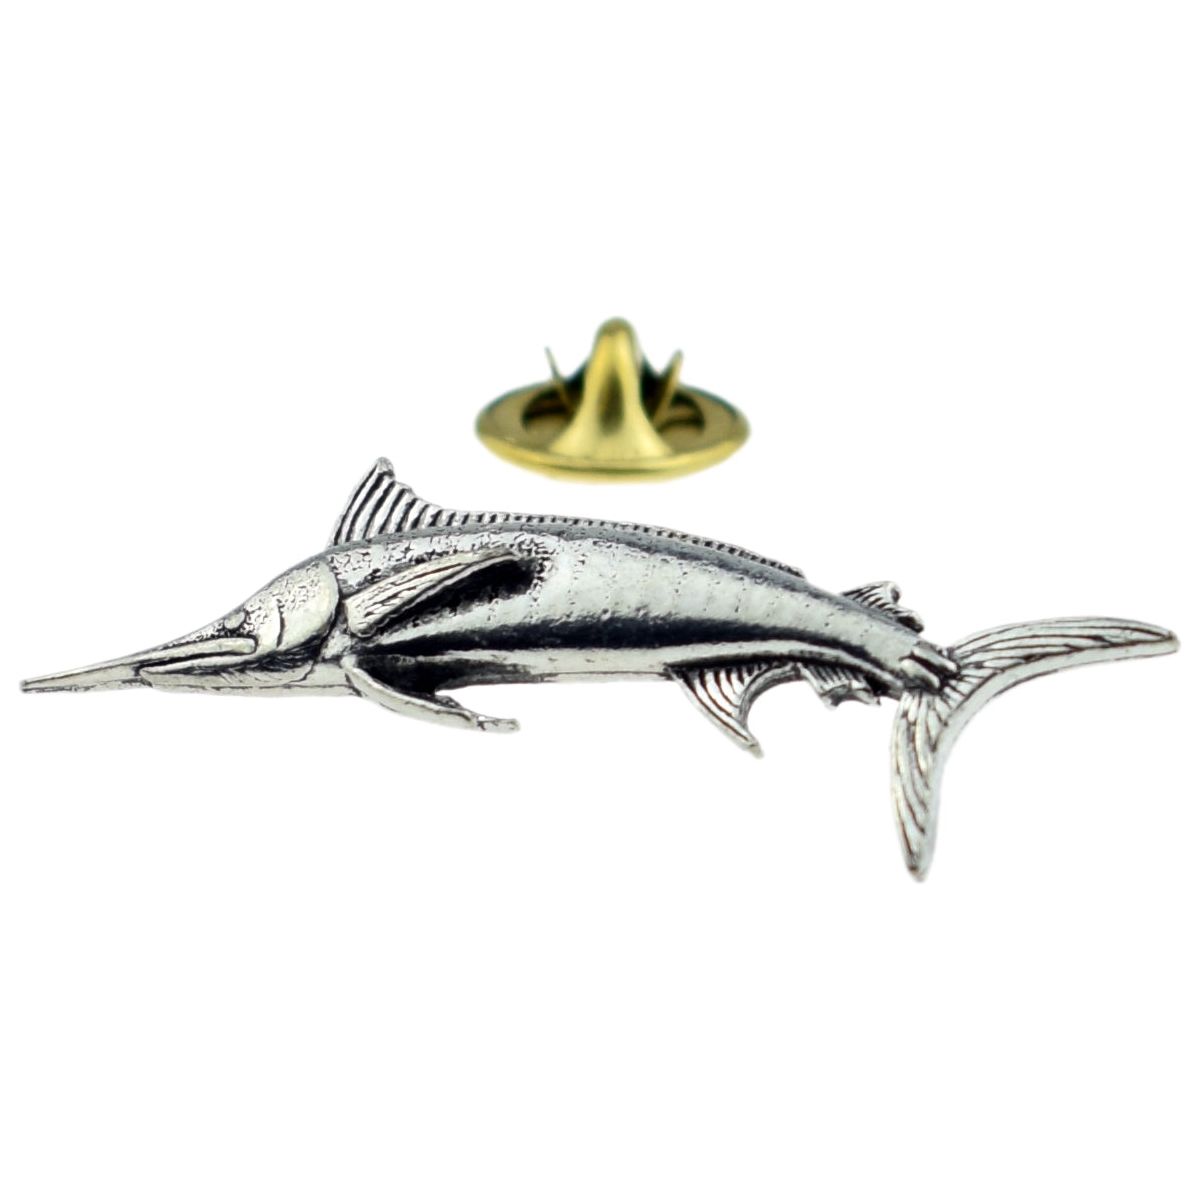 Marlin (like a Swordfish) Pewter Lapel Pin Badge - Ashton and Finch